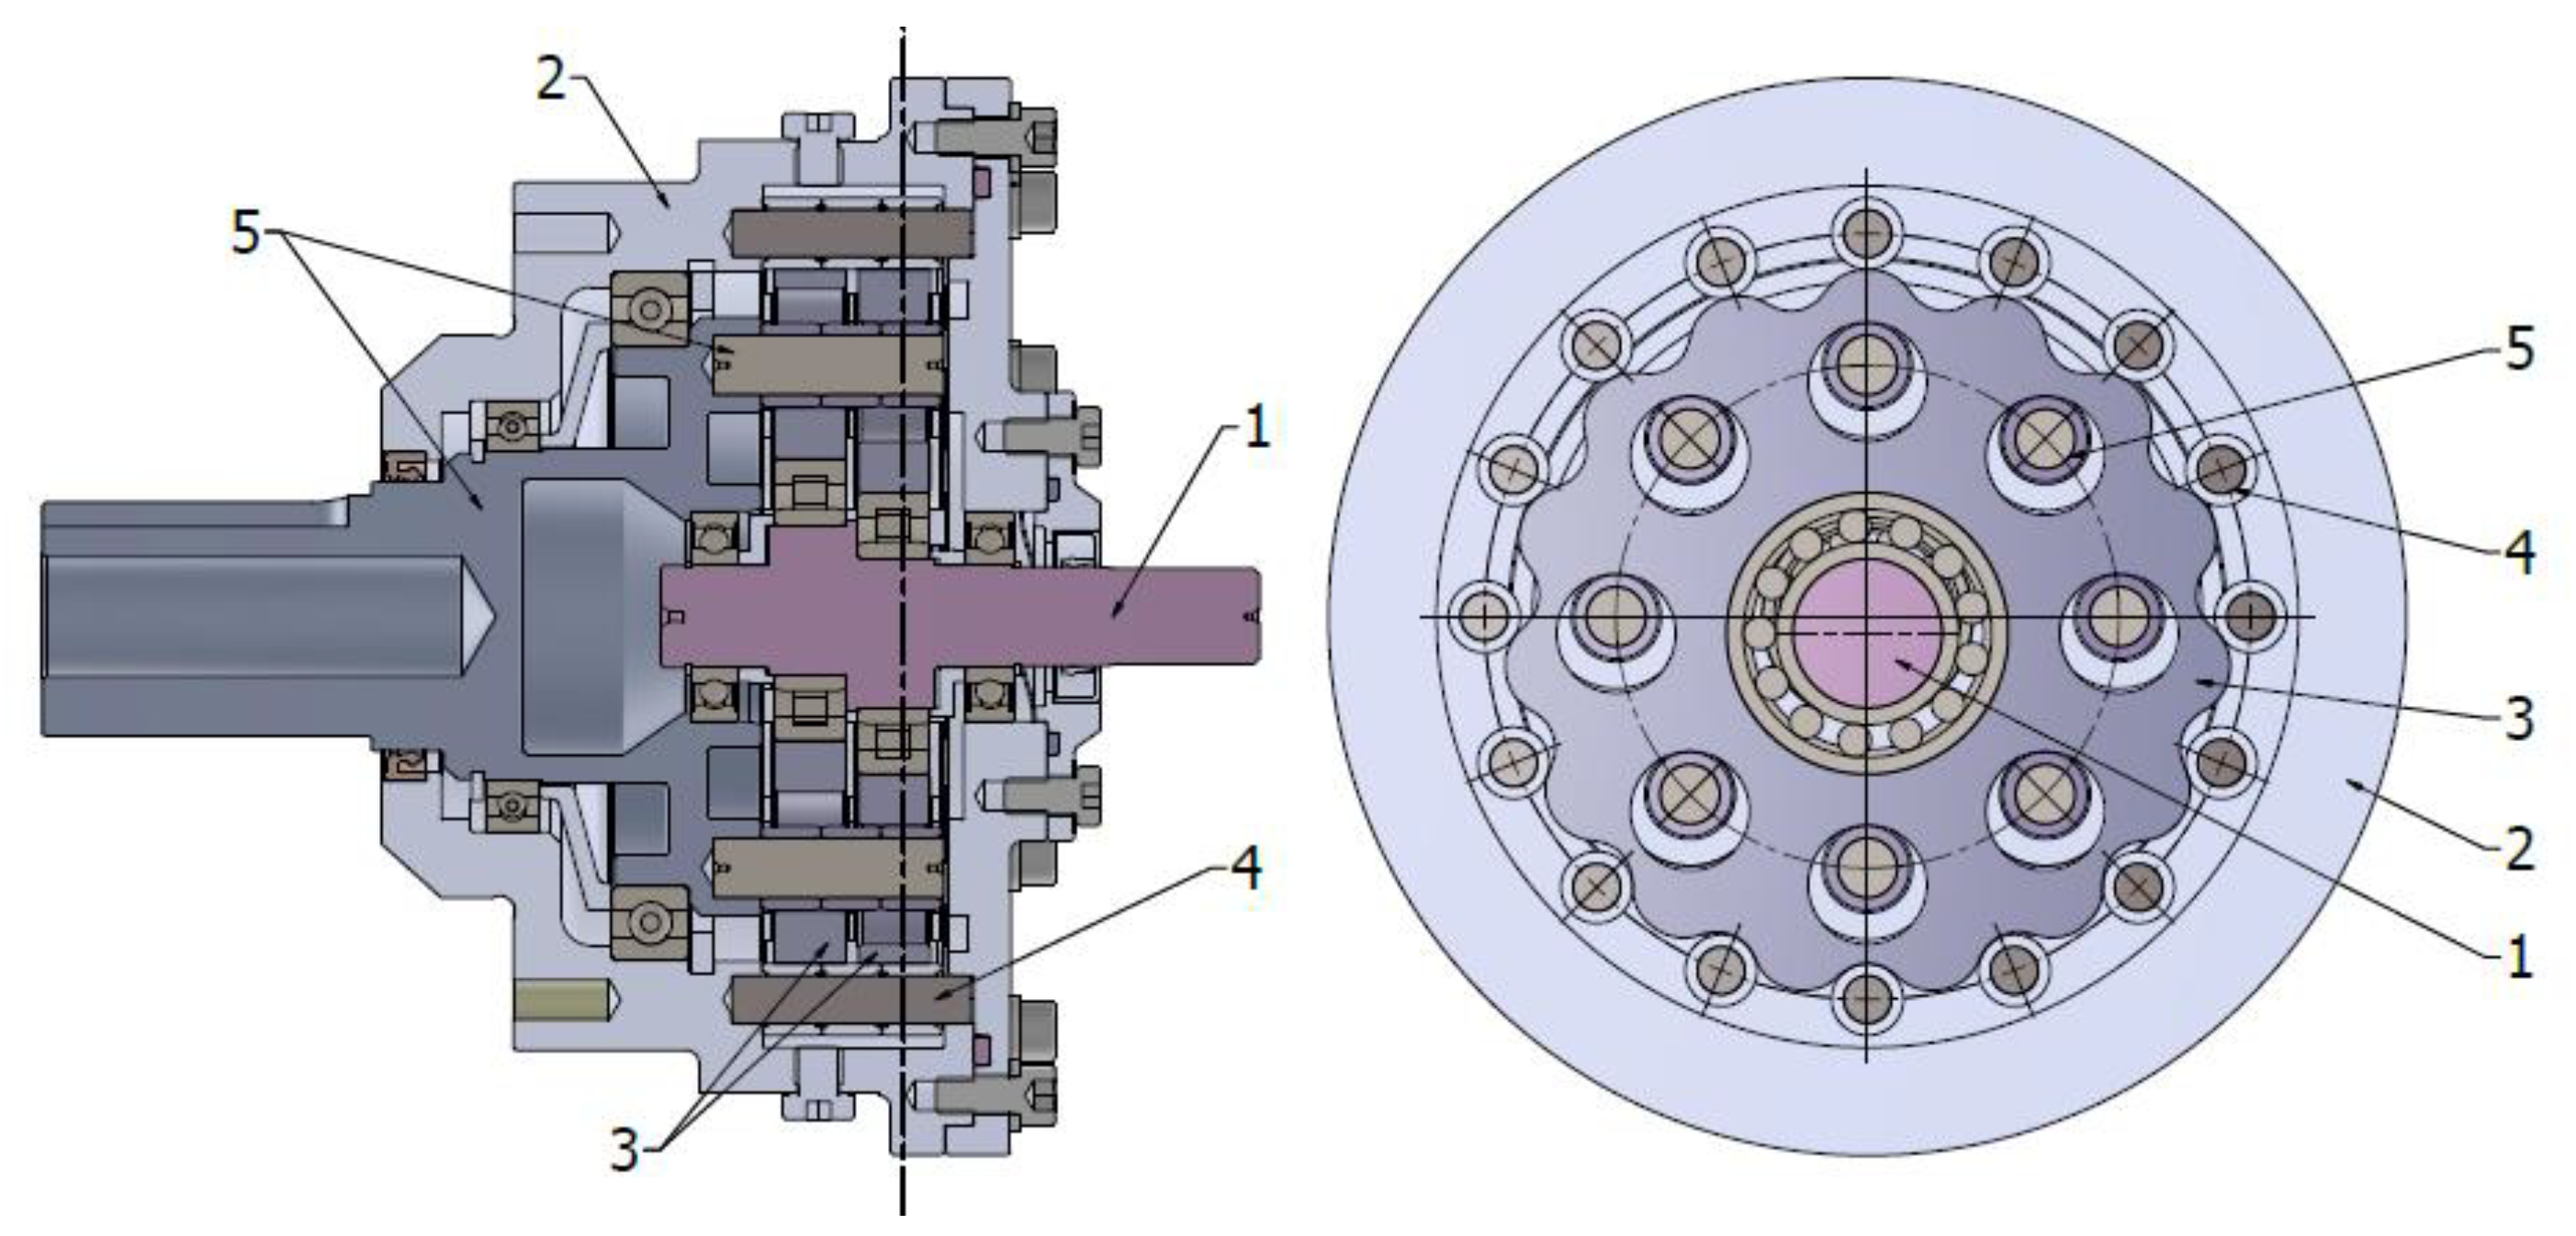 Cycloidal gears versus planetary gears